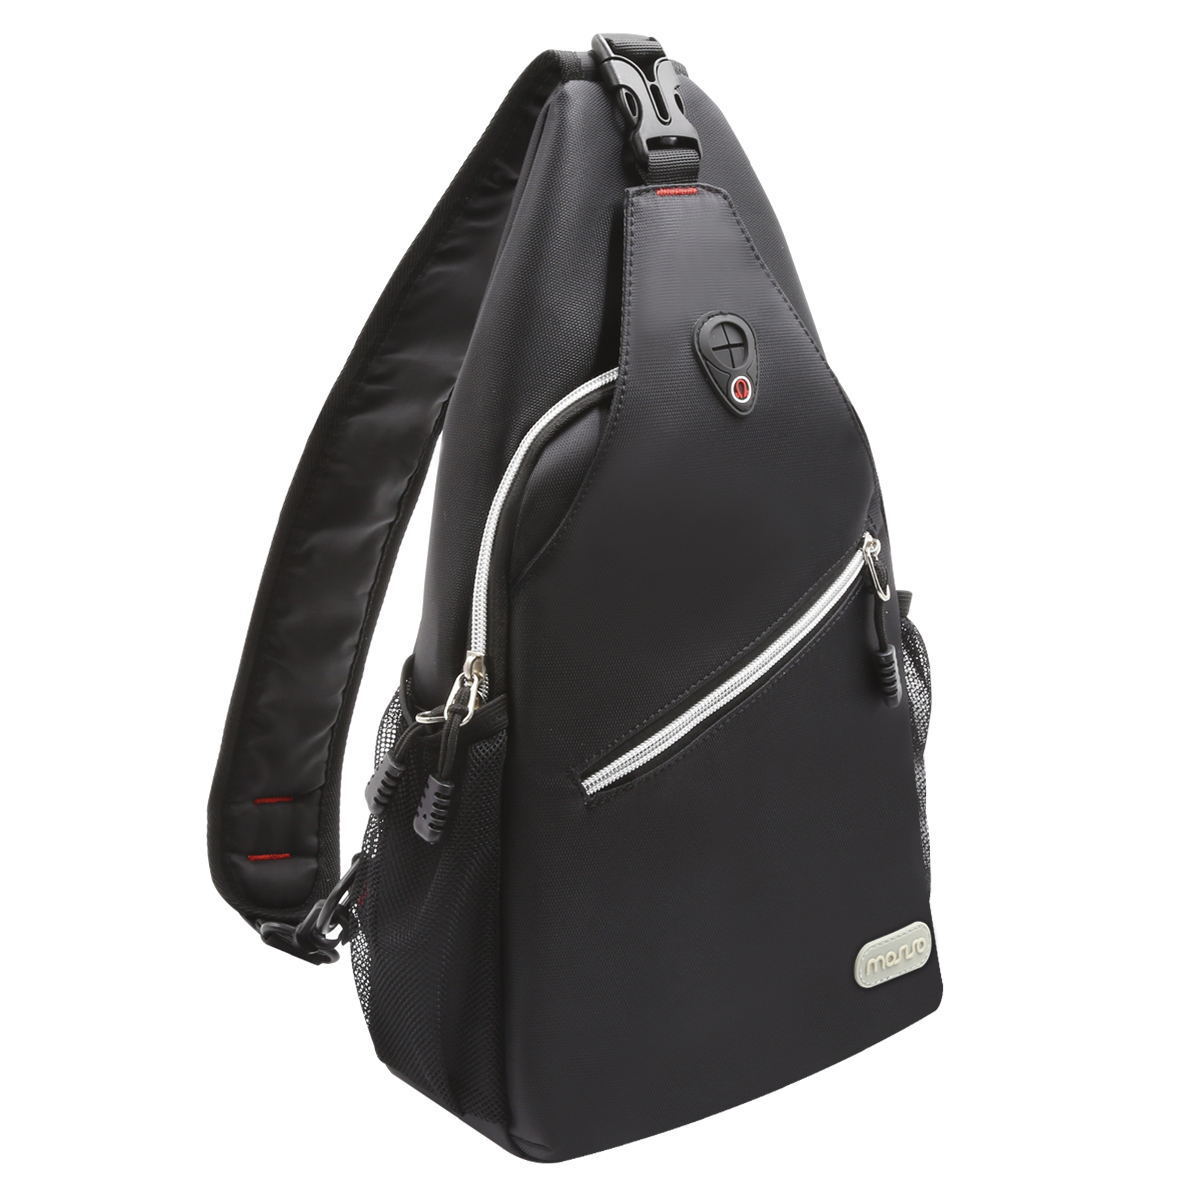 Chest Sling Backpack Crossbody Shoulder Bag Travel Hiking Daypack for Men Women